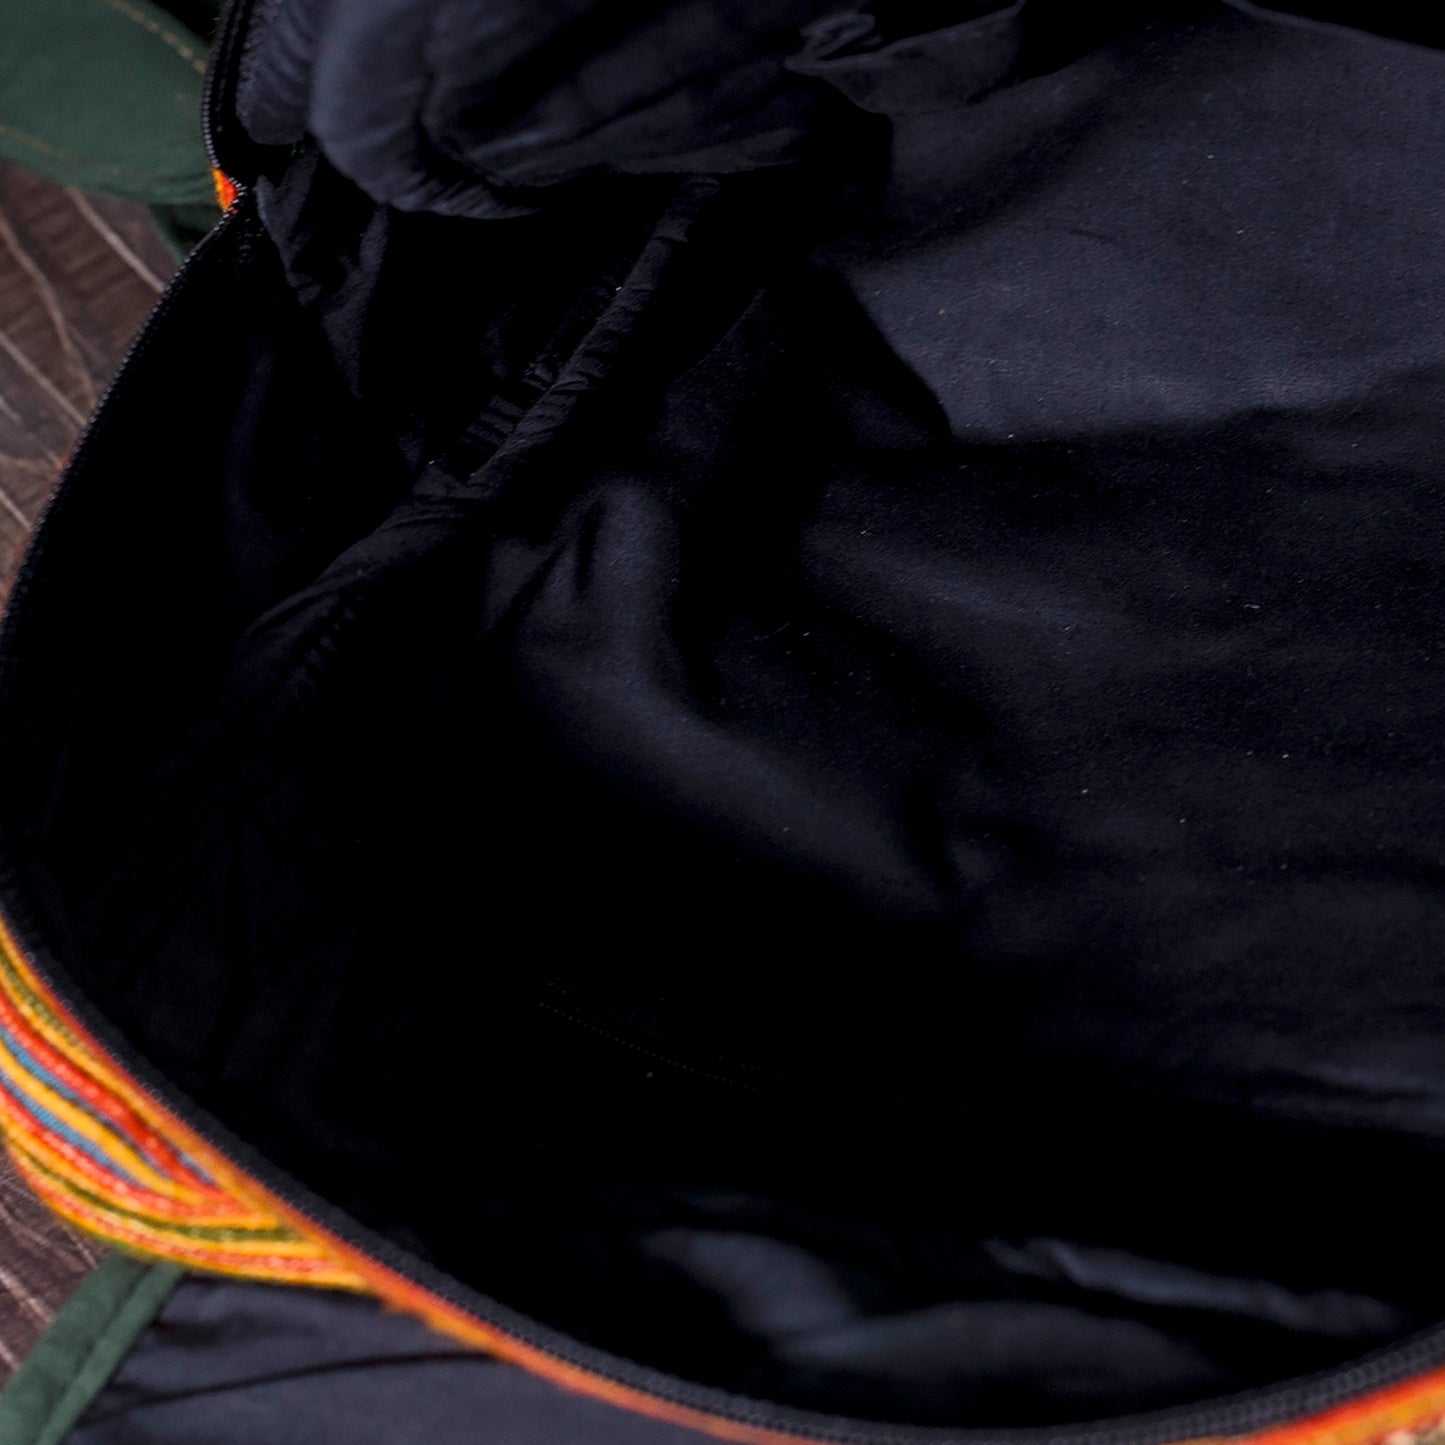 Stor ryggsäck, orange handbroderityg, konstläderkant, mossgrön färg